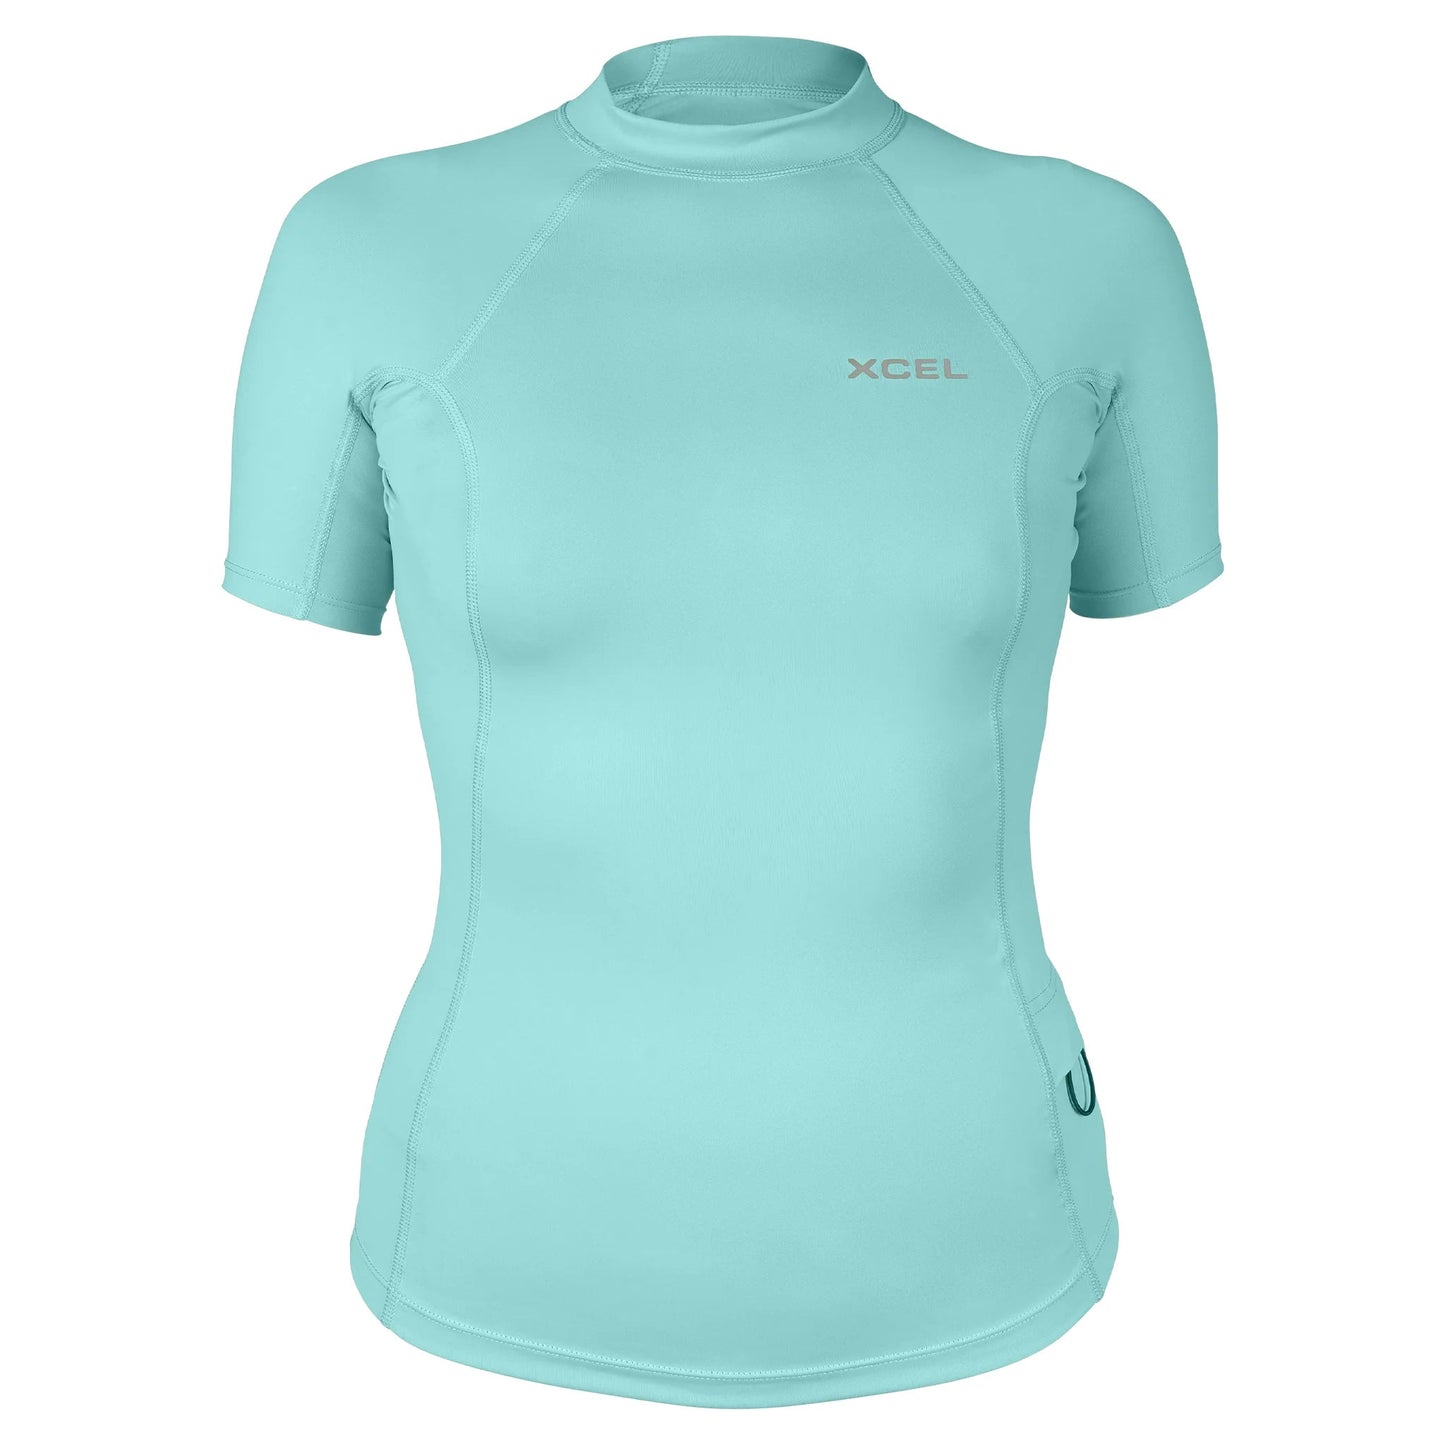 XCEL Women's Premium Stretch Short Sleeve Performance Fit UV Top Rashguard XCEL WETSUITS 